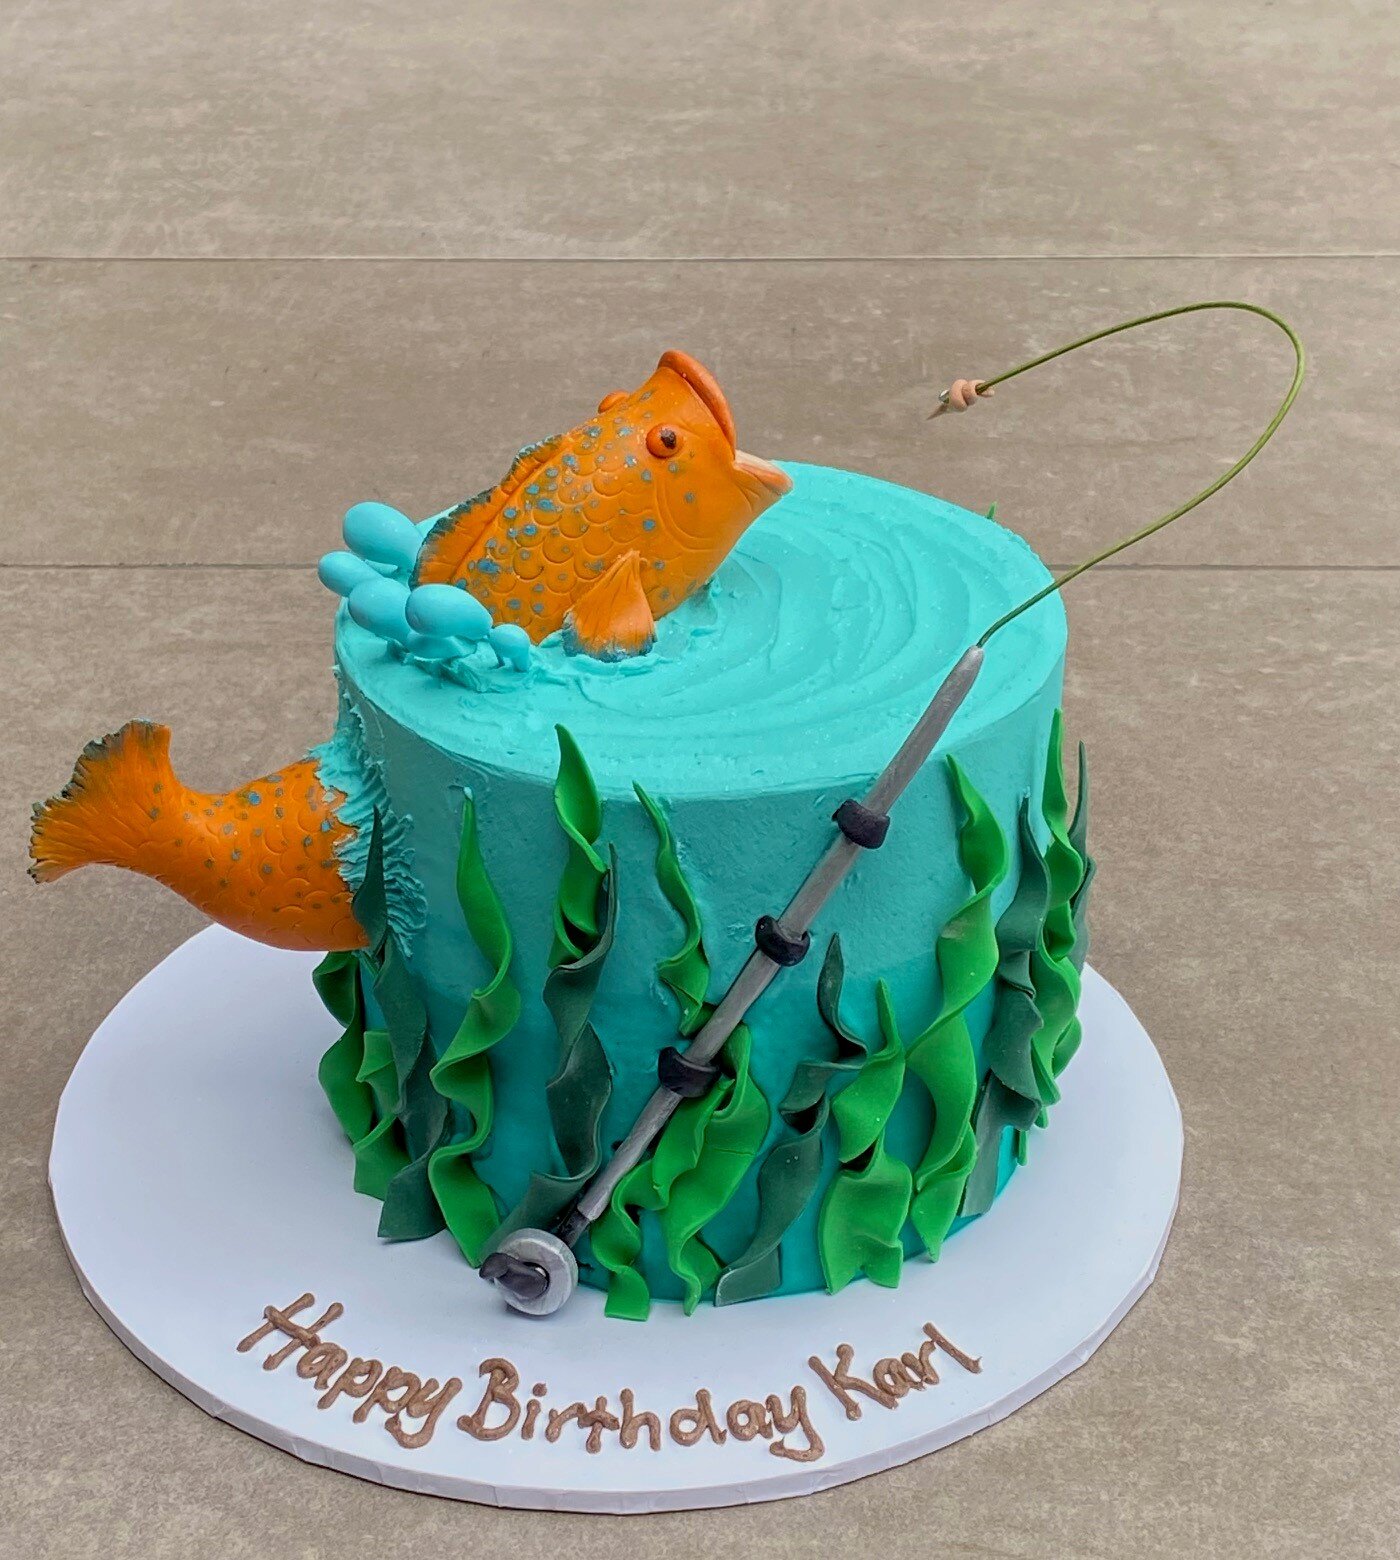 vanillapodspecialtycakes-brisbanecakes-birthdaycakes-kidscakes-cupcakes (44).jpg